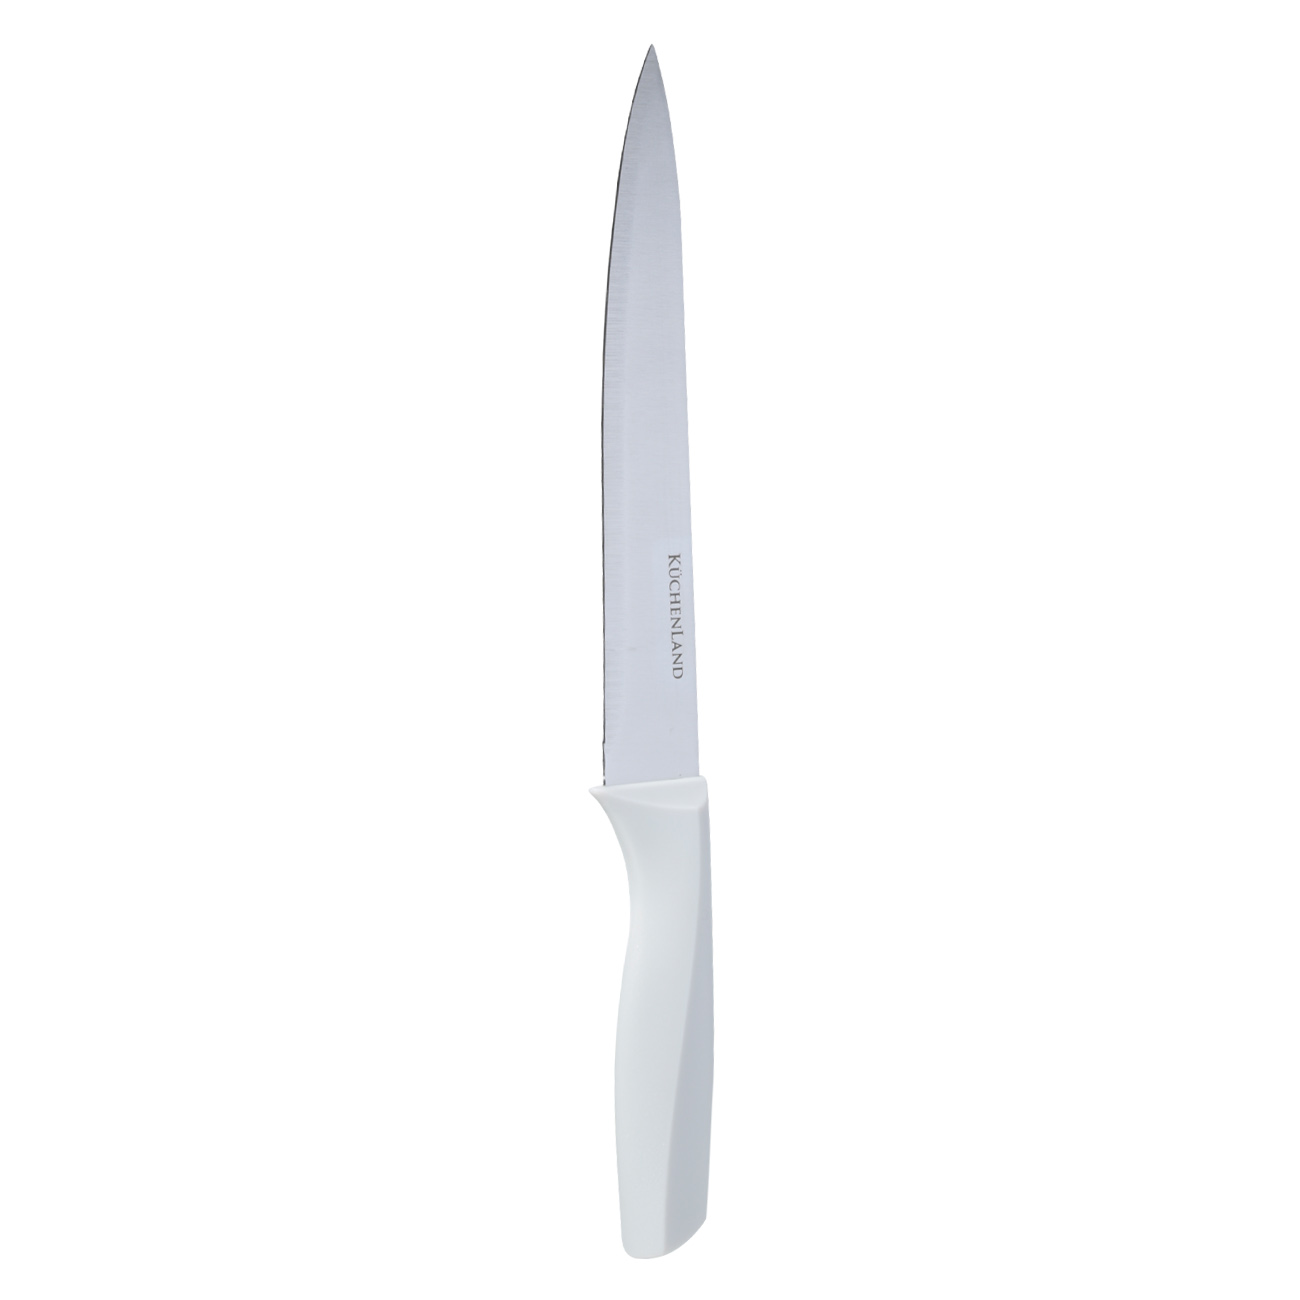 Knife set, 5 pr, in stand, steel / plastic, grey, Daily изображение № 5